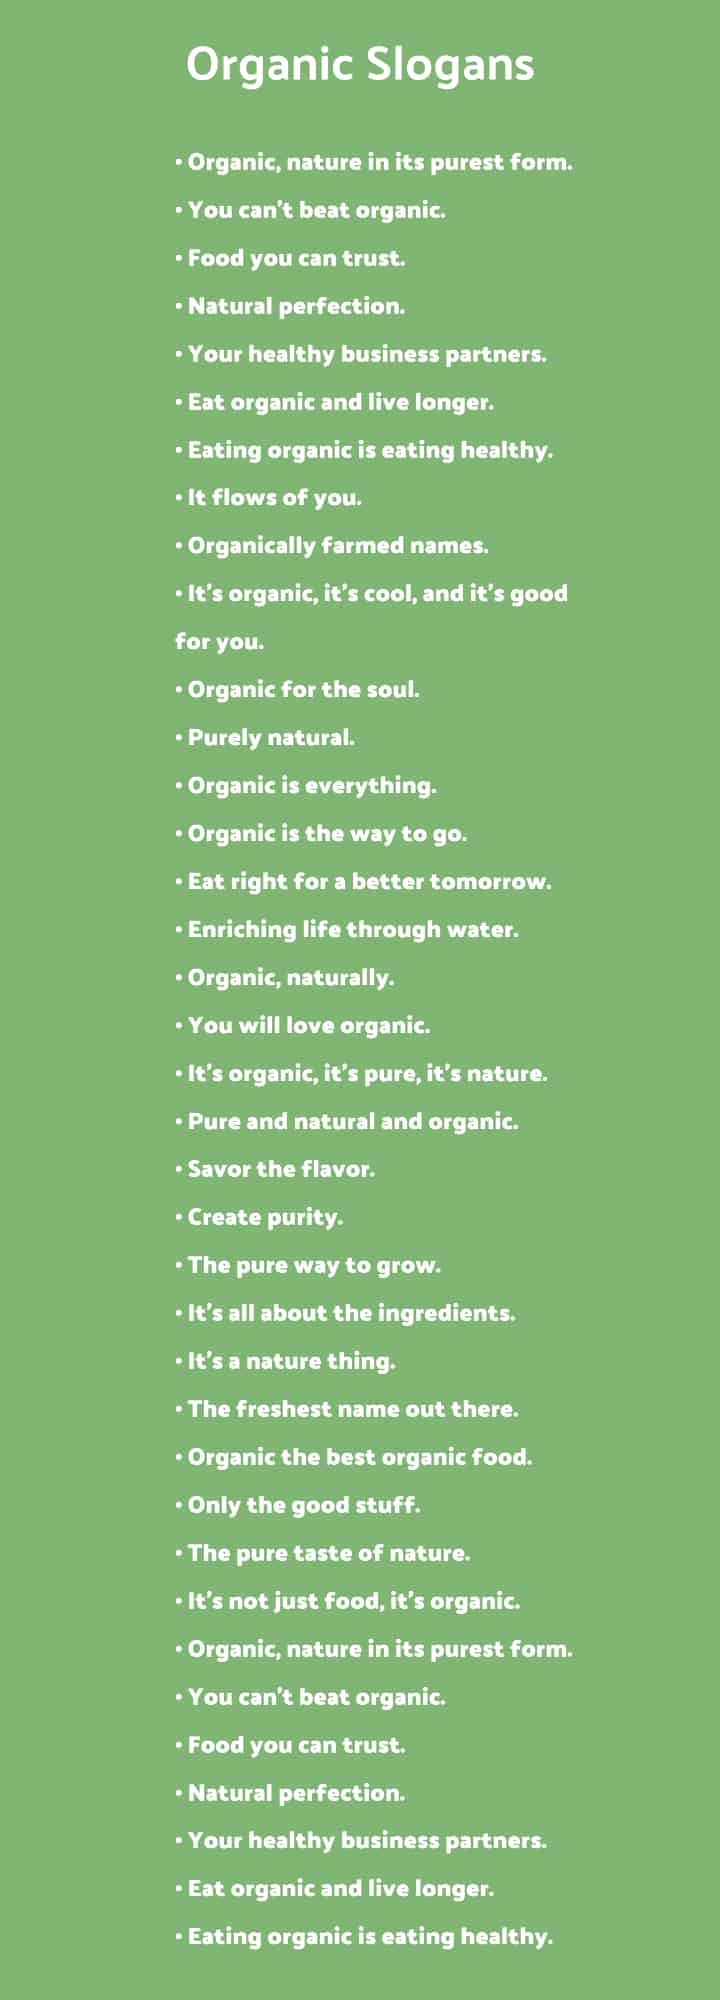 Organic Slogans for Herbal Business